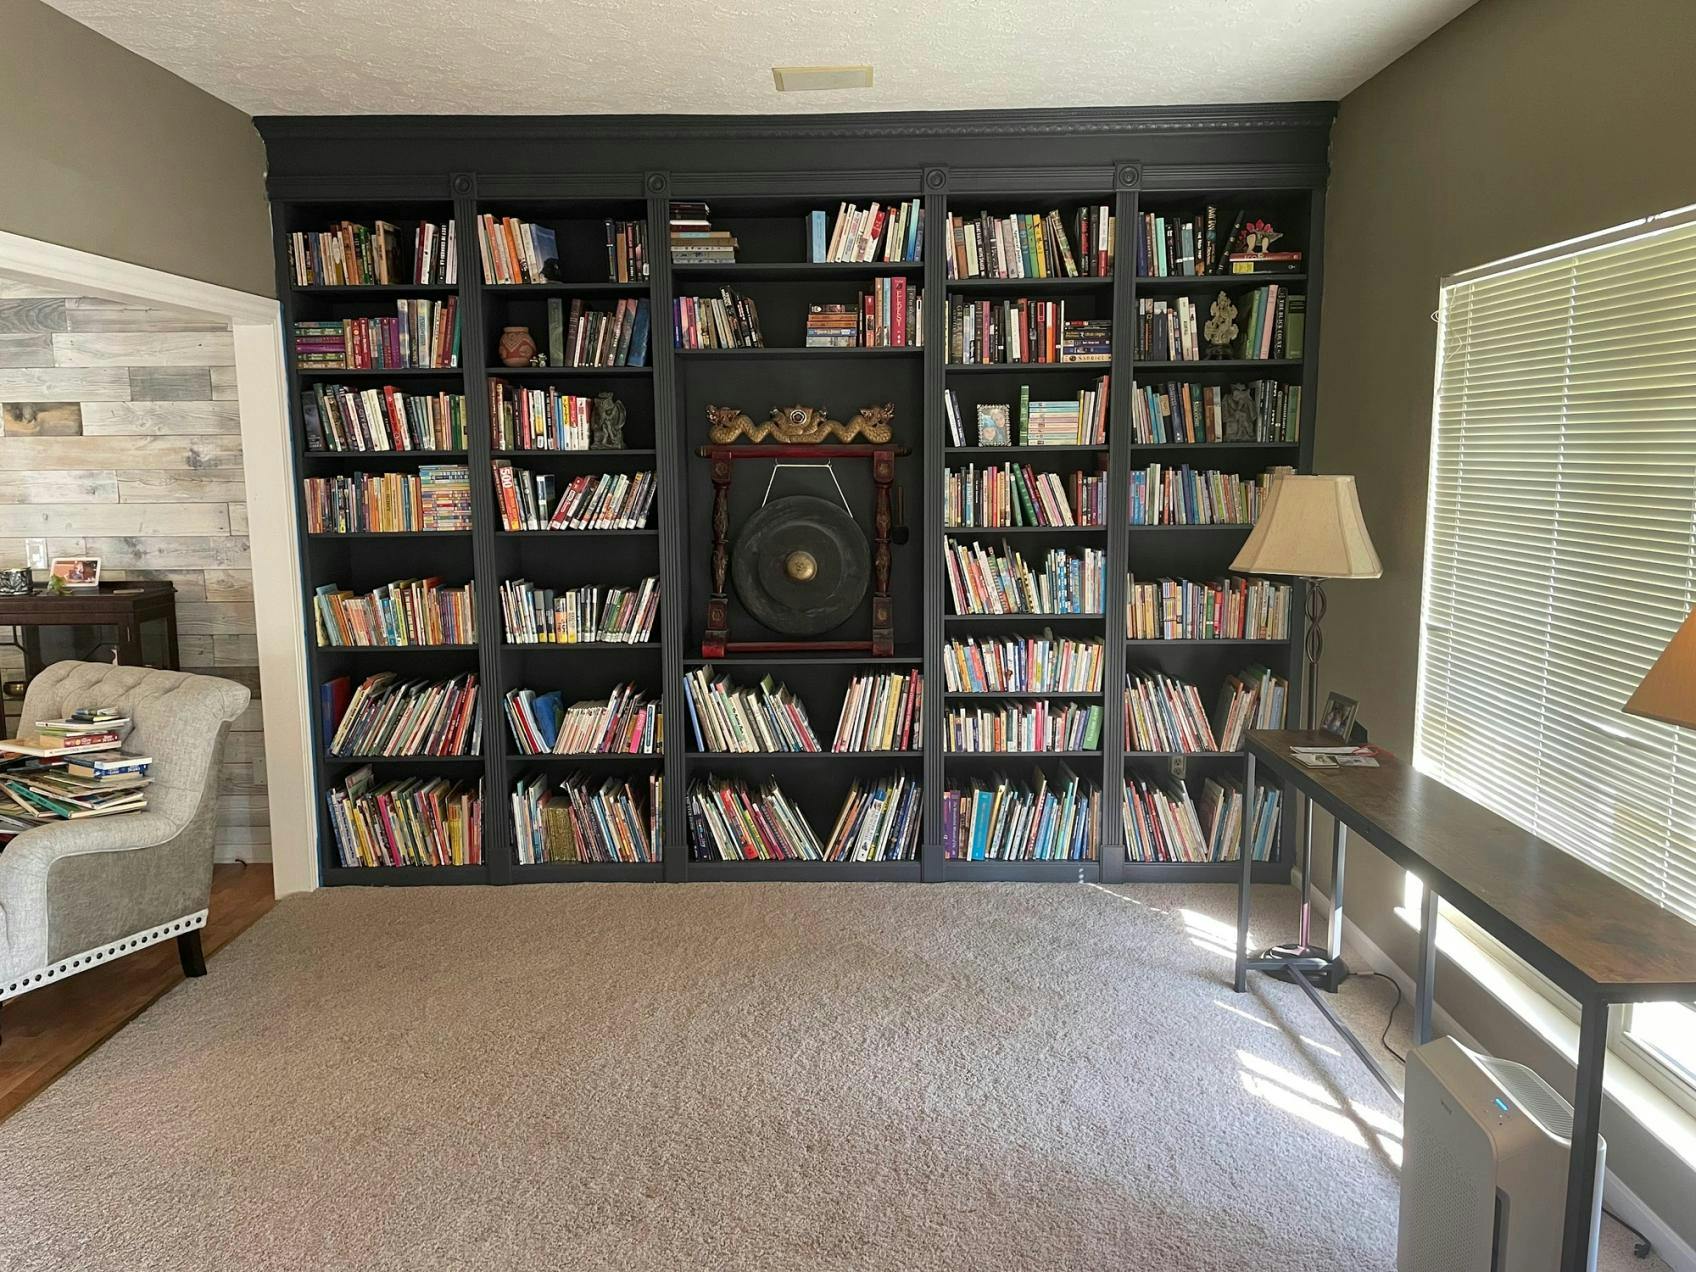 Nognom's Finished Bookshelf